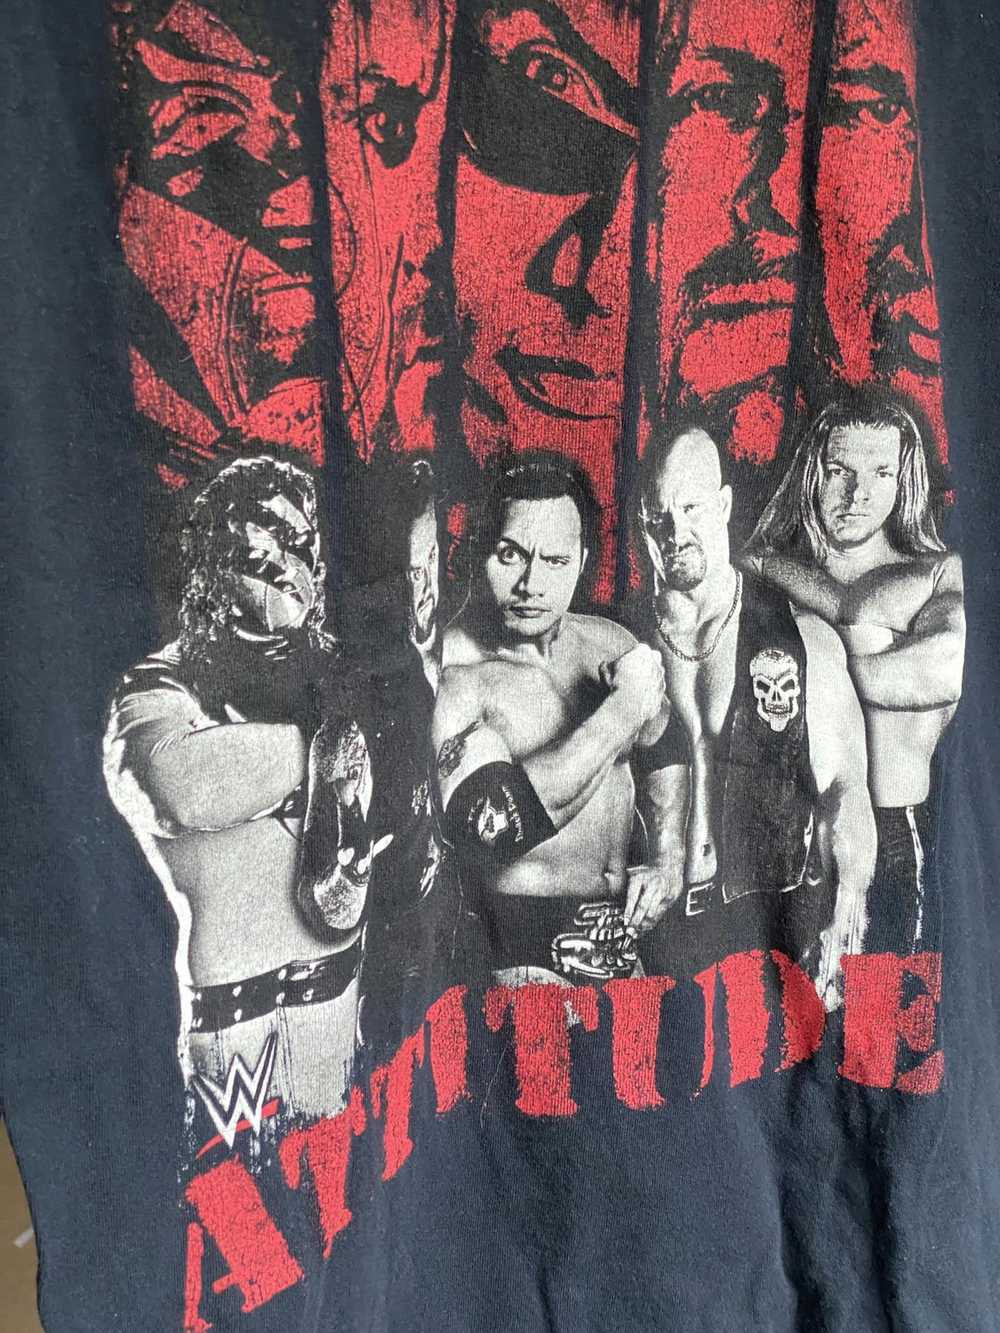 Wwe WWE Attitude Era Classic Shirt - image 2